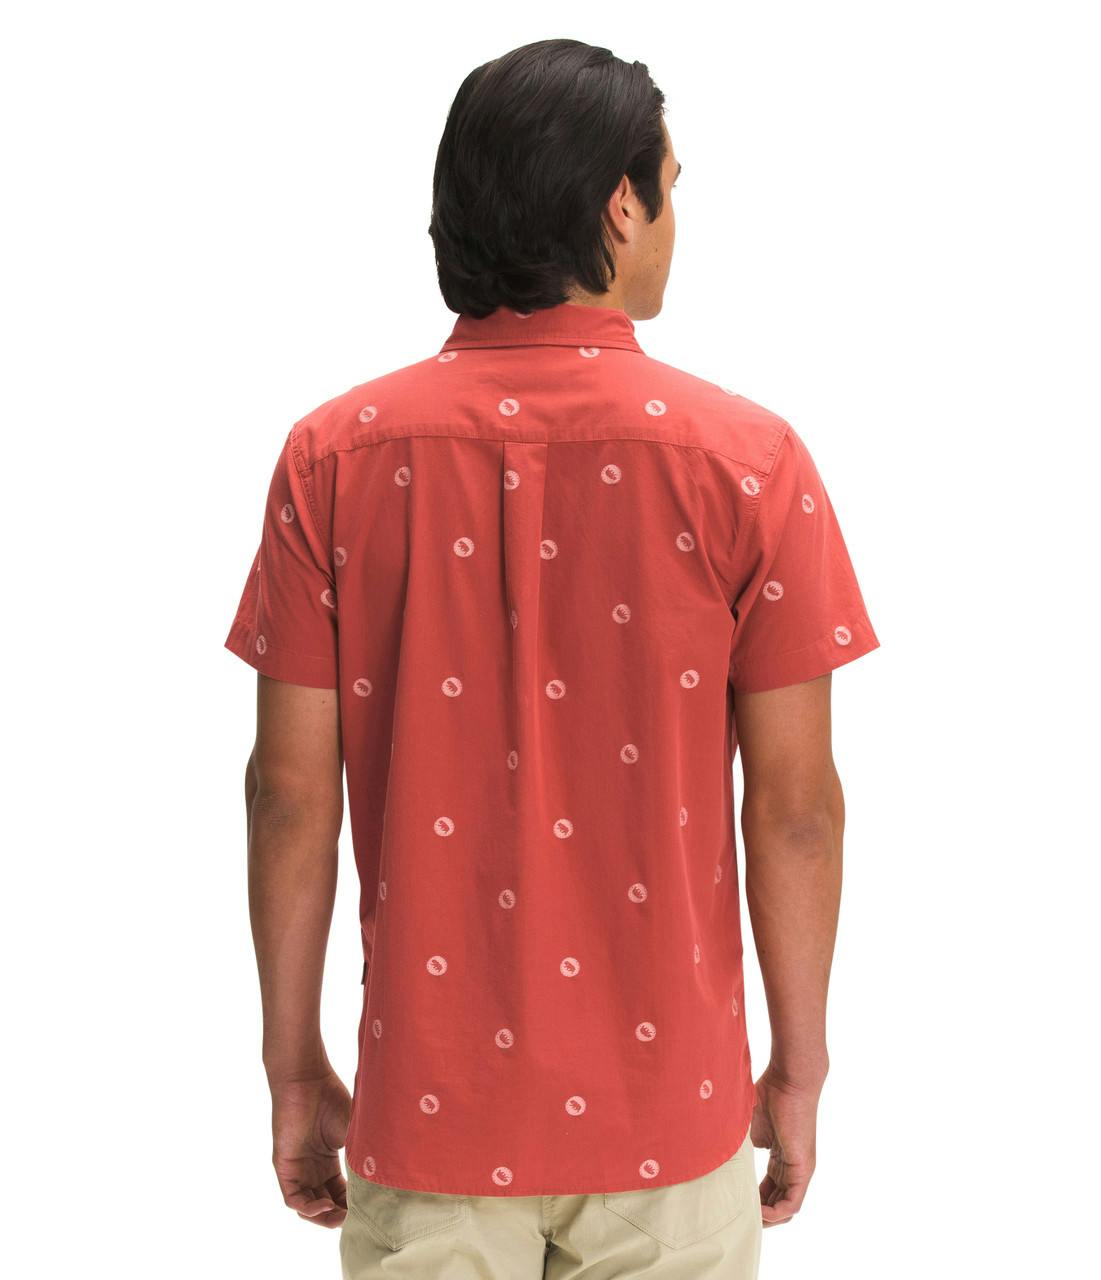 Baytrail Jacquard Short Sleeve Shirt Tandoori Spice Red TNF Be